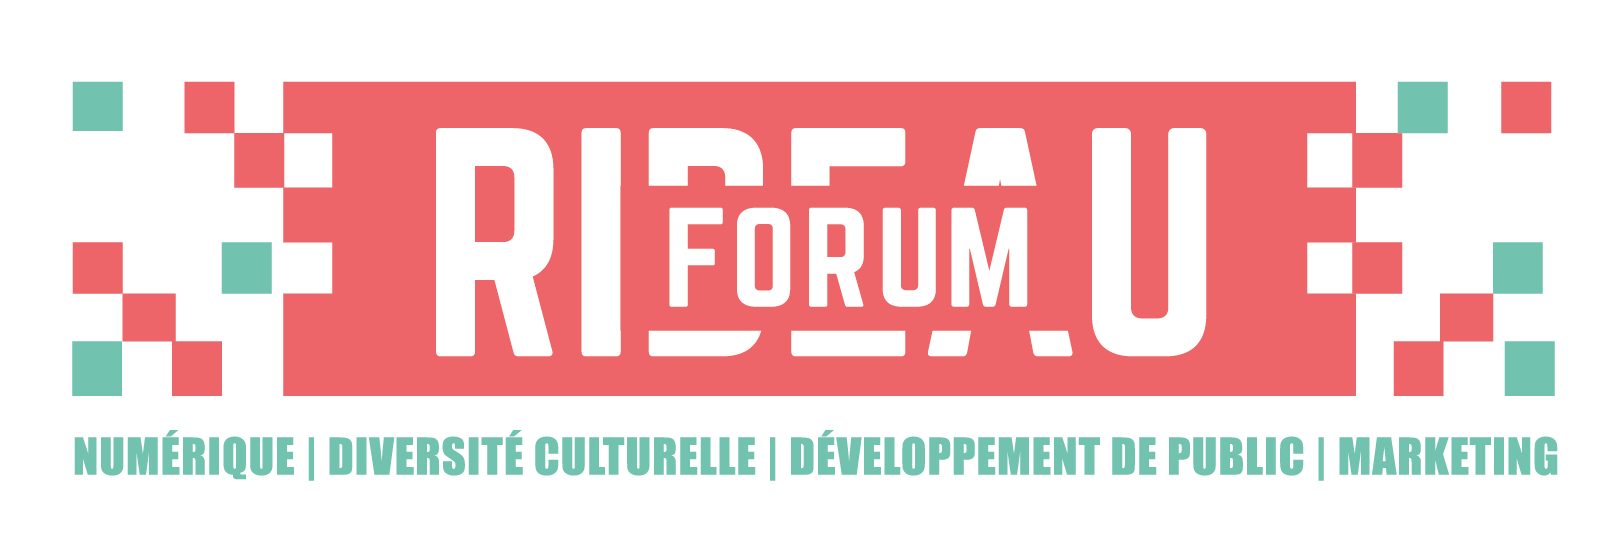 logo-forum-v2018-coul-01-1